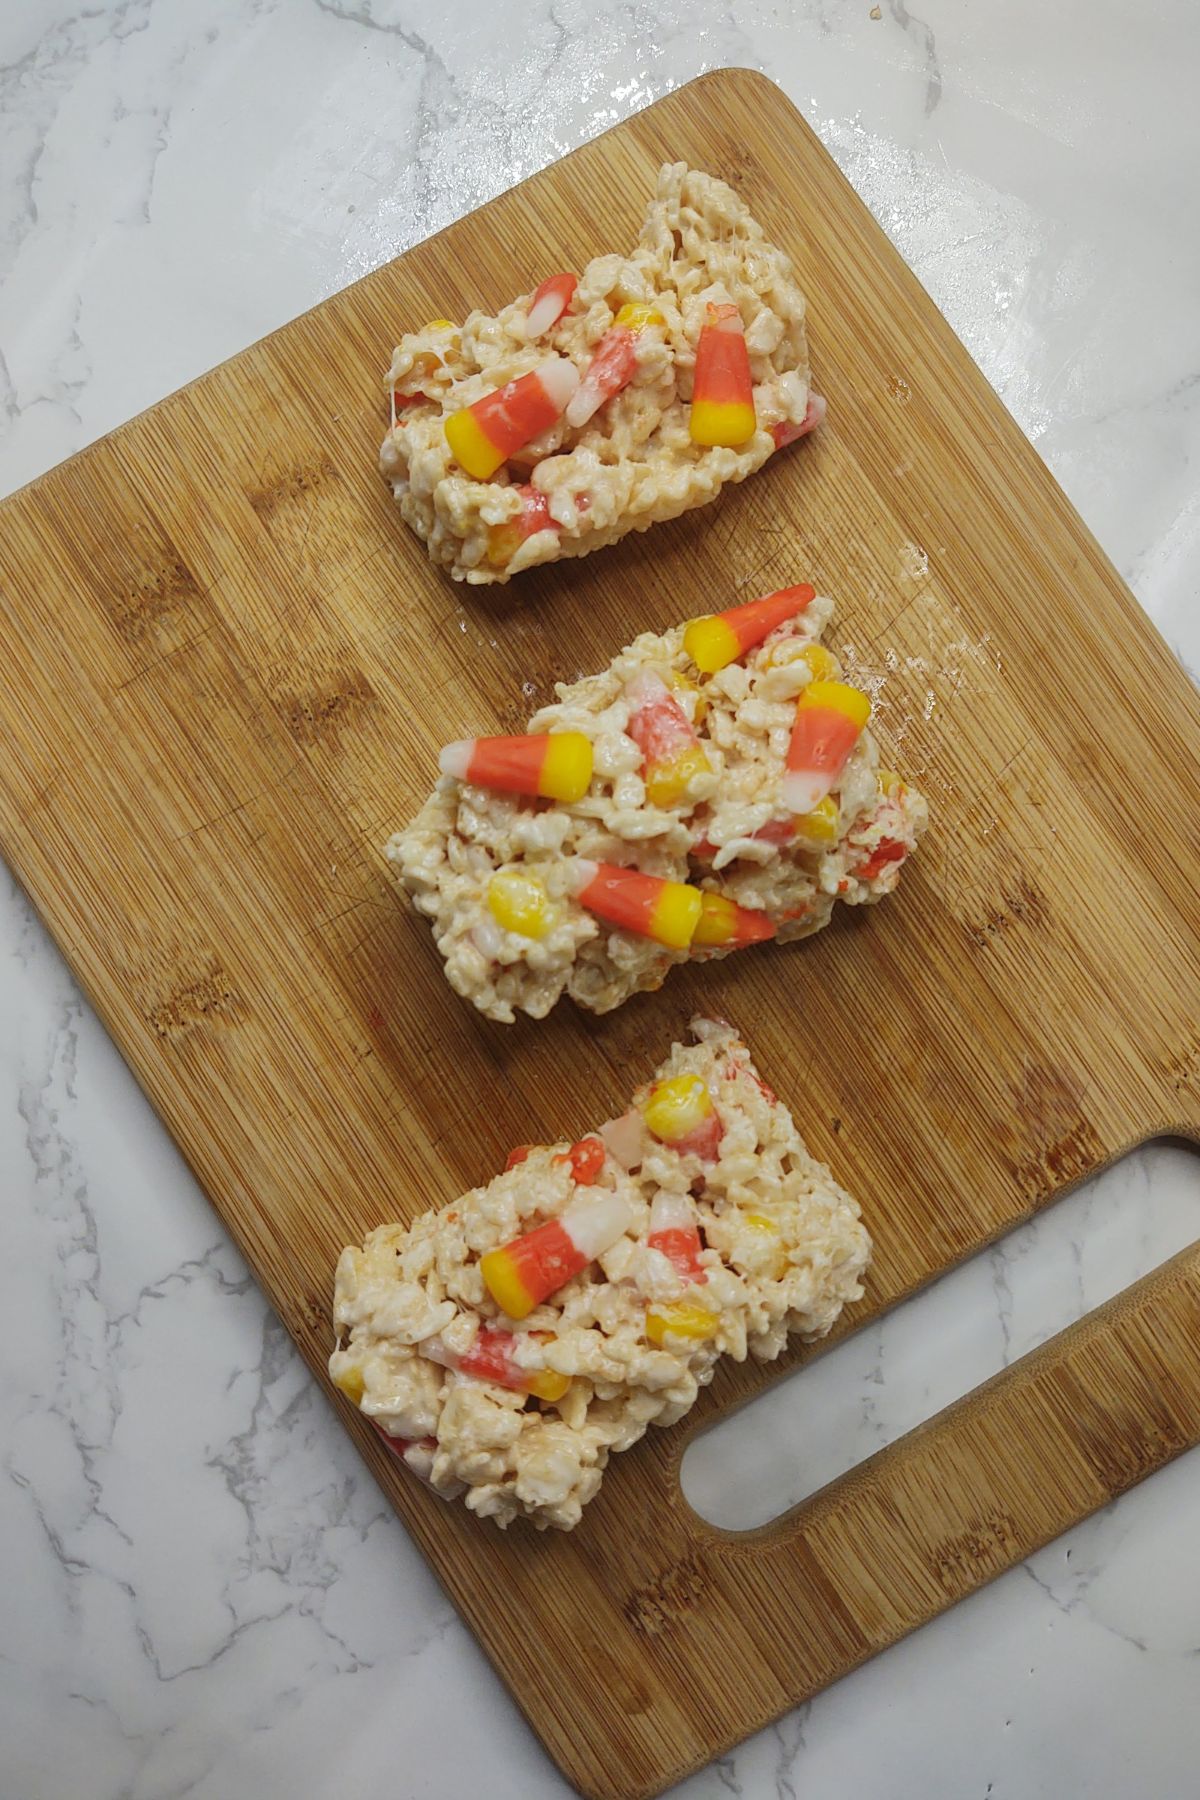 Candy corn rice krispie treats on a wooden cutting board.